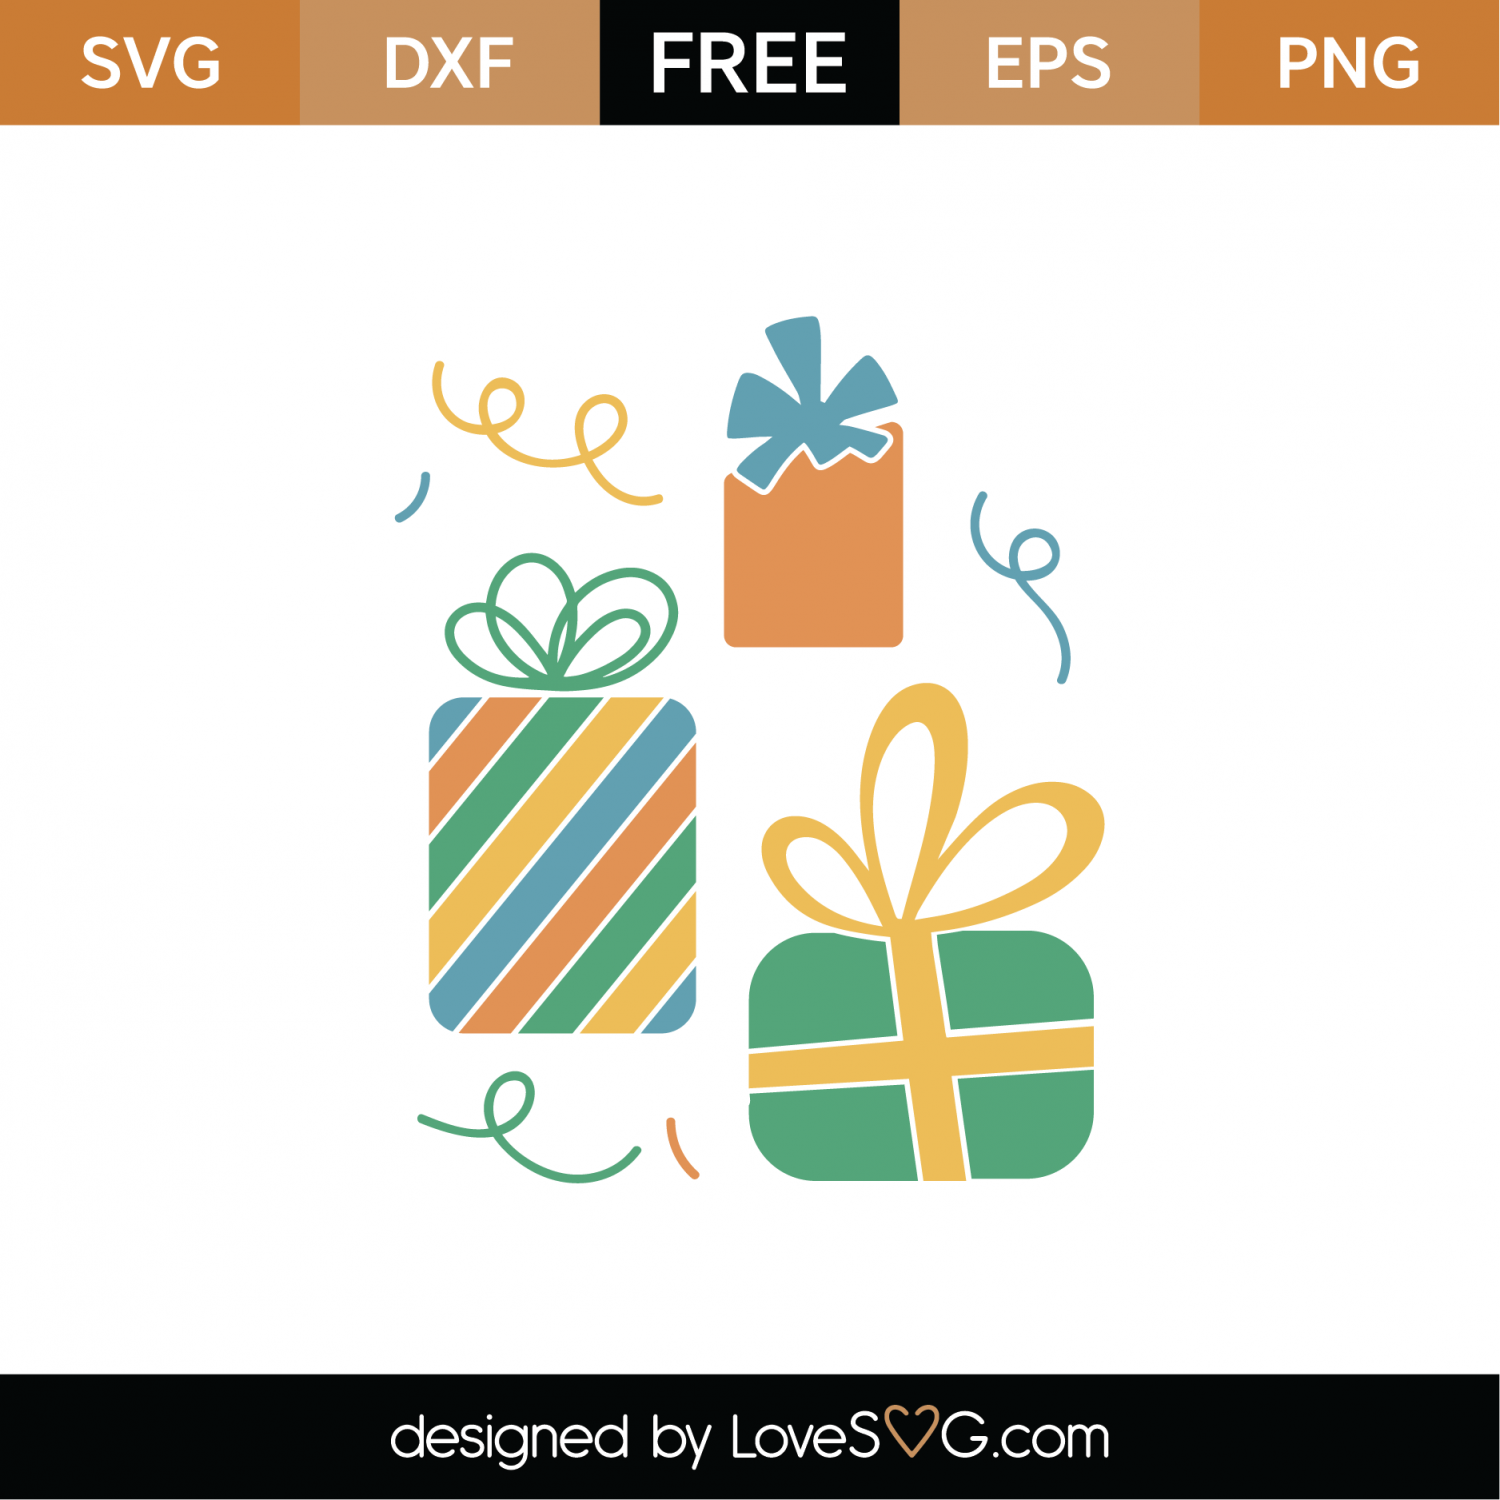 Free Birthday Gifts SVG Cut File | Lovesvg.com